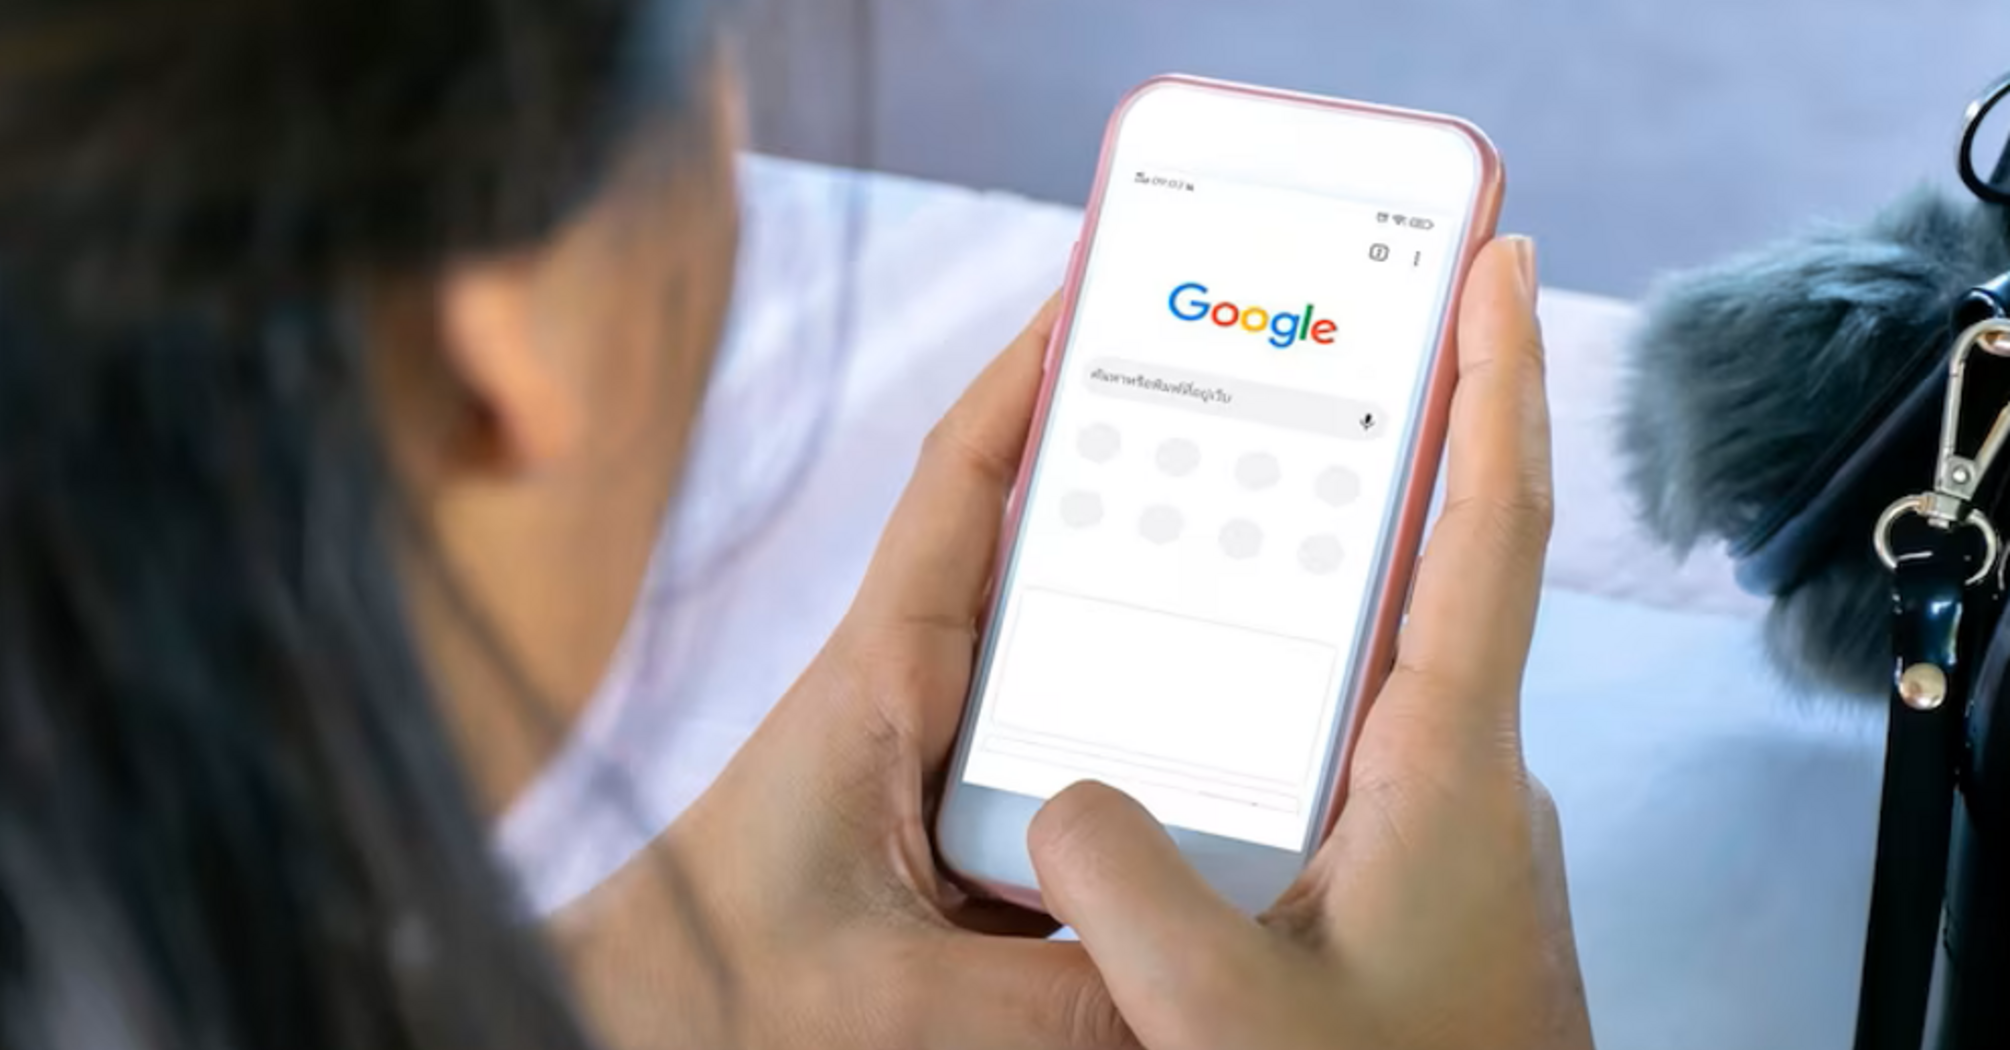 Top 10 popular health queries on Google